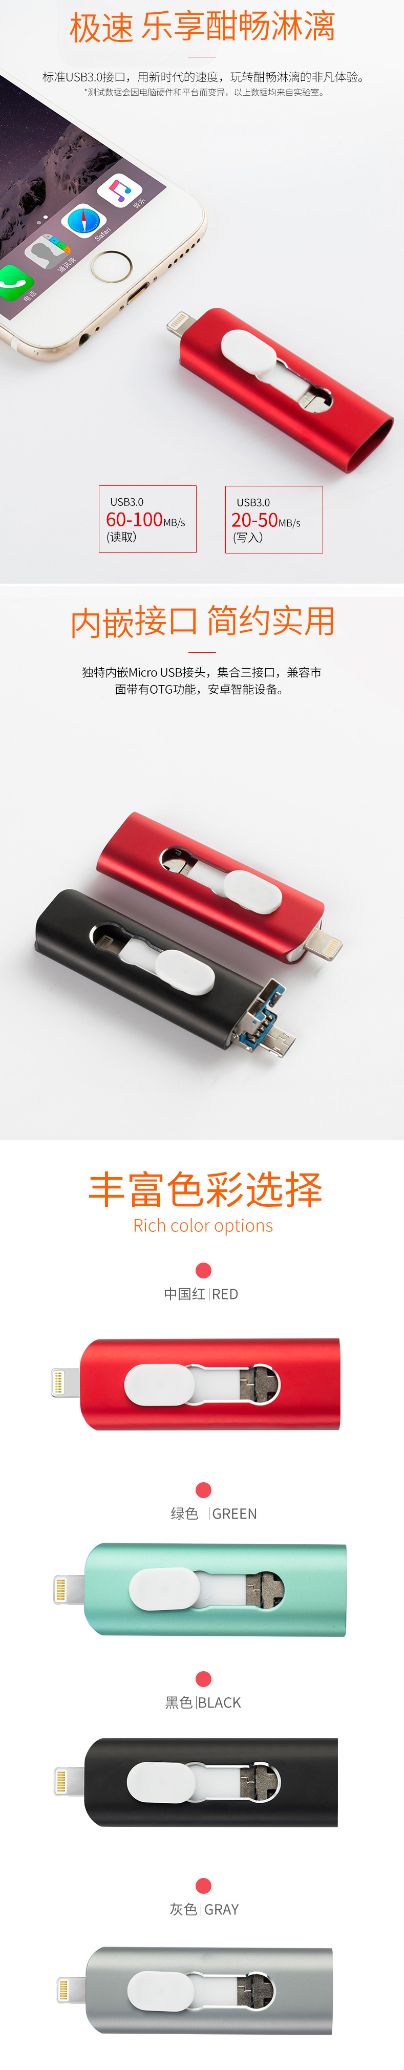 Y15定制三合一USB iOS手机U盘 广告礼品多功能定制U盘详情5